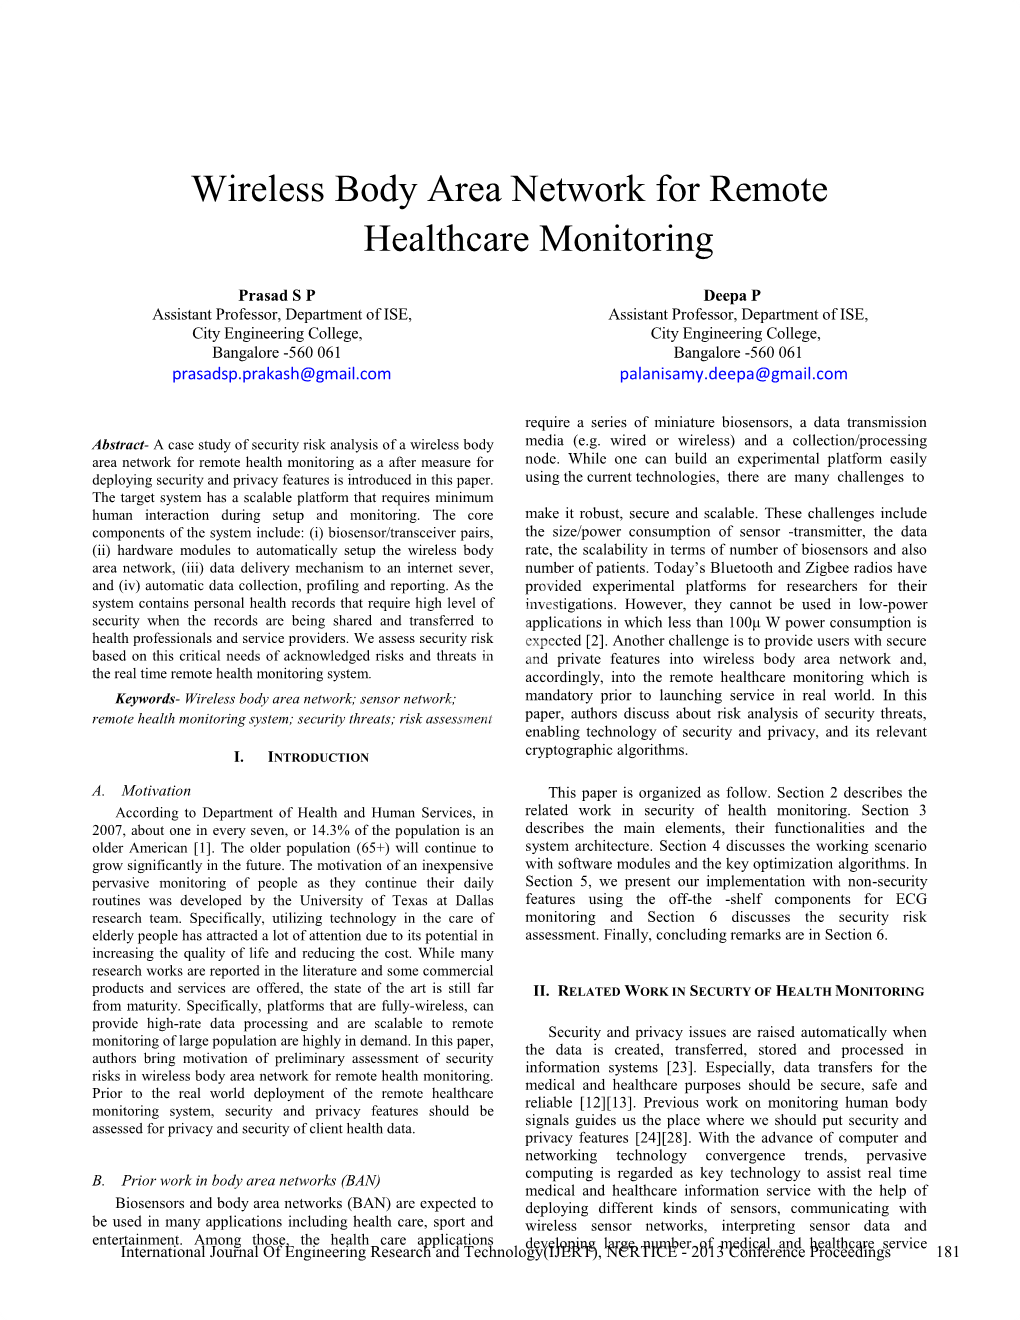 Wireless Body Area Network for Remote Healthcare Monitoring